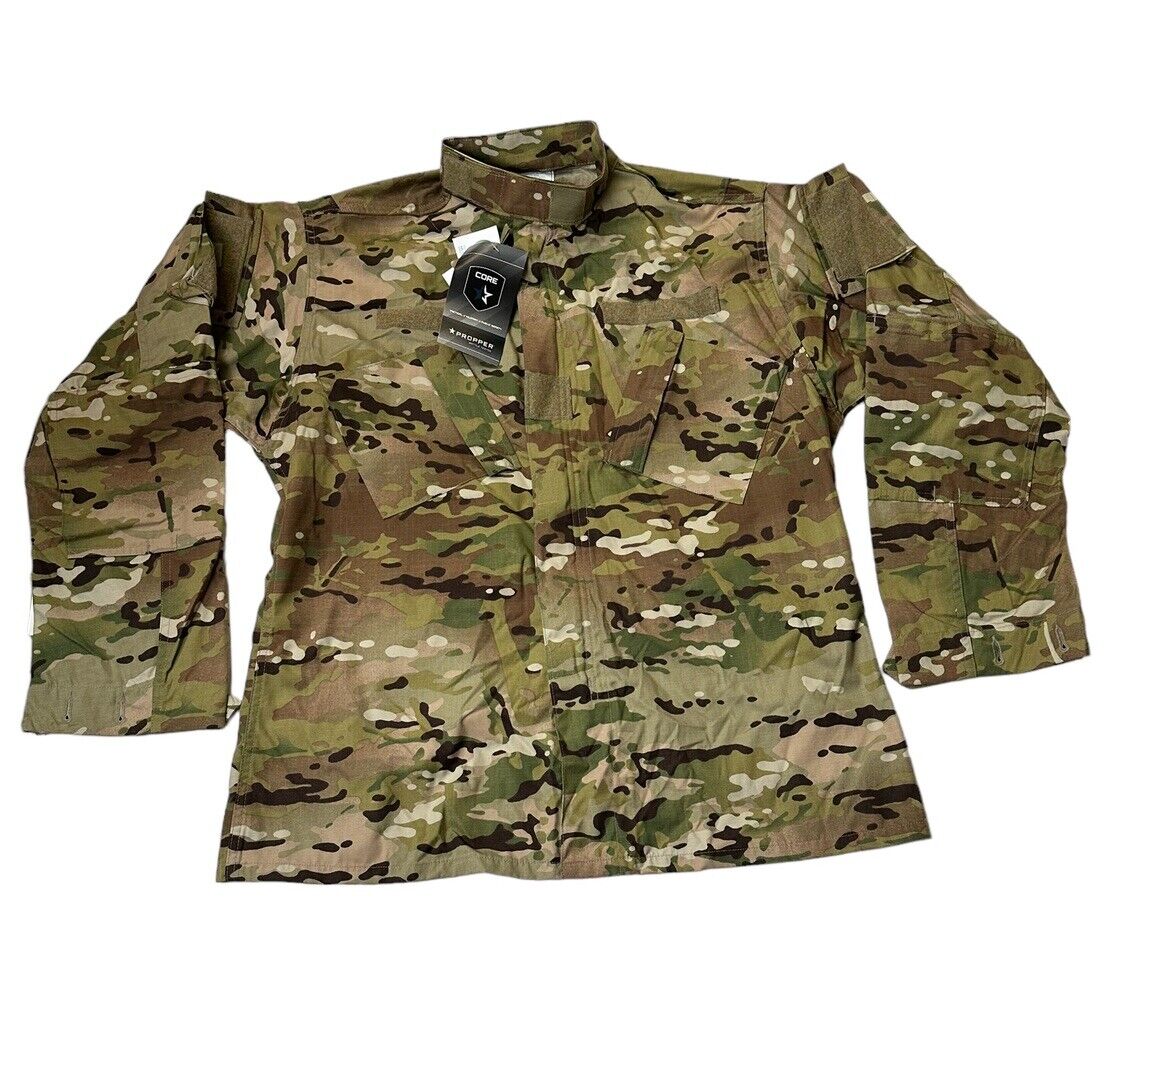 NWT Propper Army Combat Uniform Coat Large Long Multicam Pattern ACU